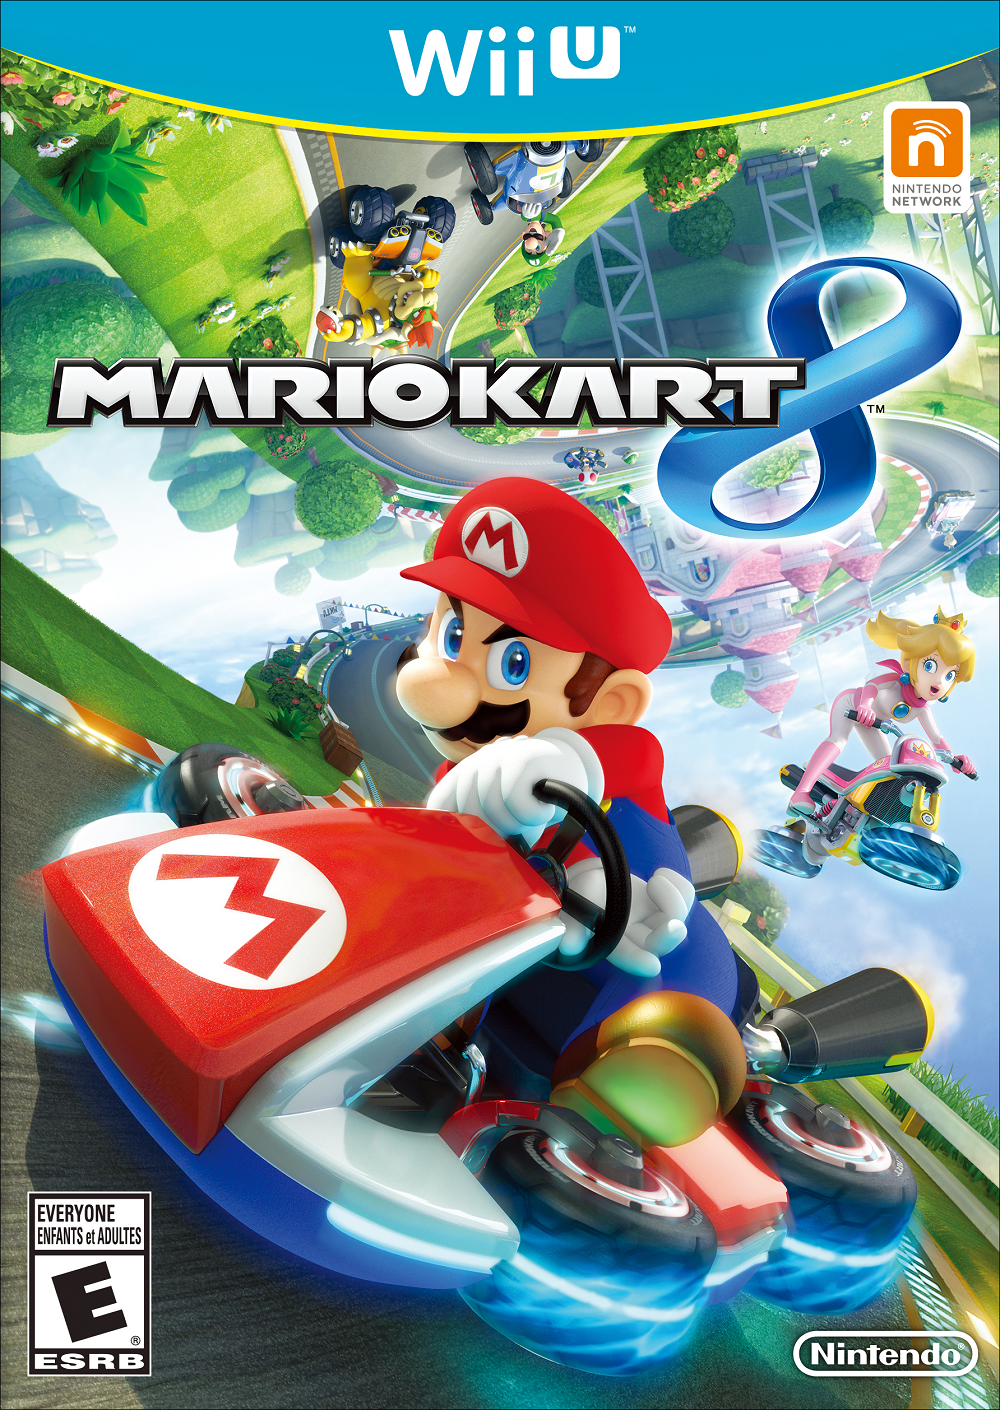 Mario And Luigi Wii U Deluxe Set Confirmed For North America, Nintendo Land  Bundle Scrapped - My Nintendo News